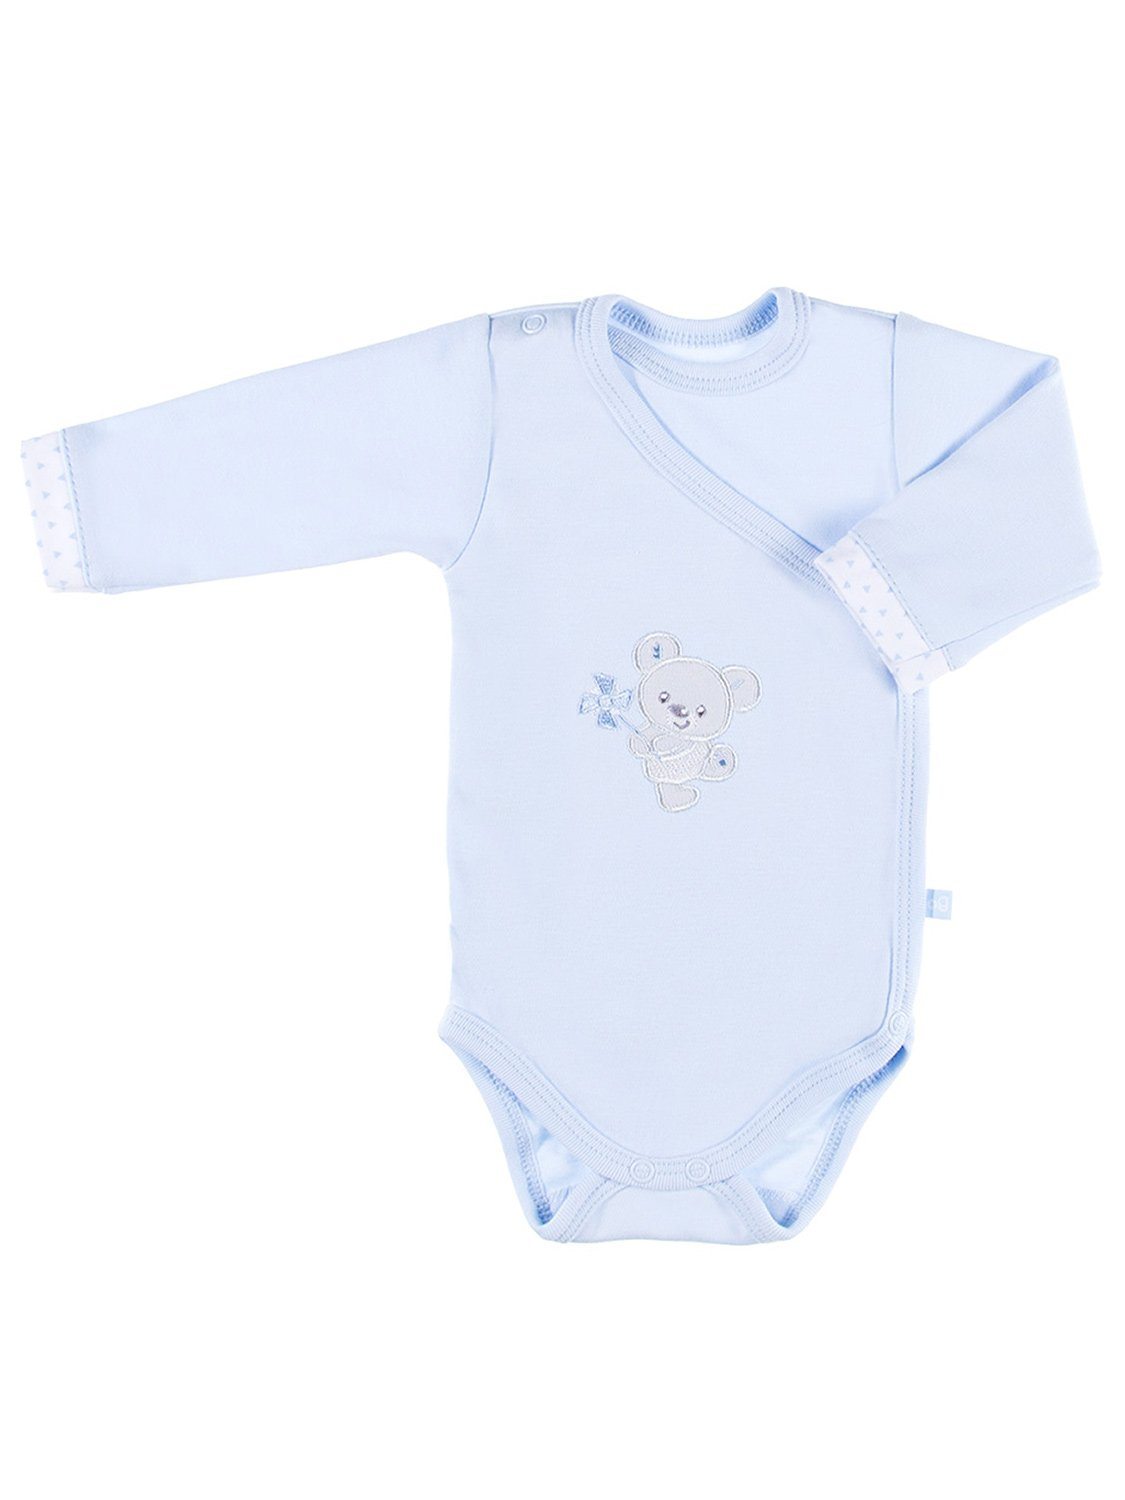 Early Baby Bodysuit, Embroidered Bear Design - Blue - Bodysuit / Vest - EEVI